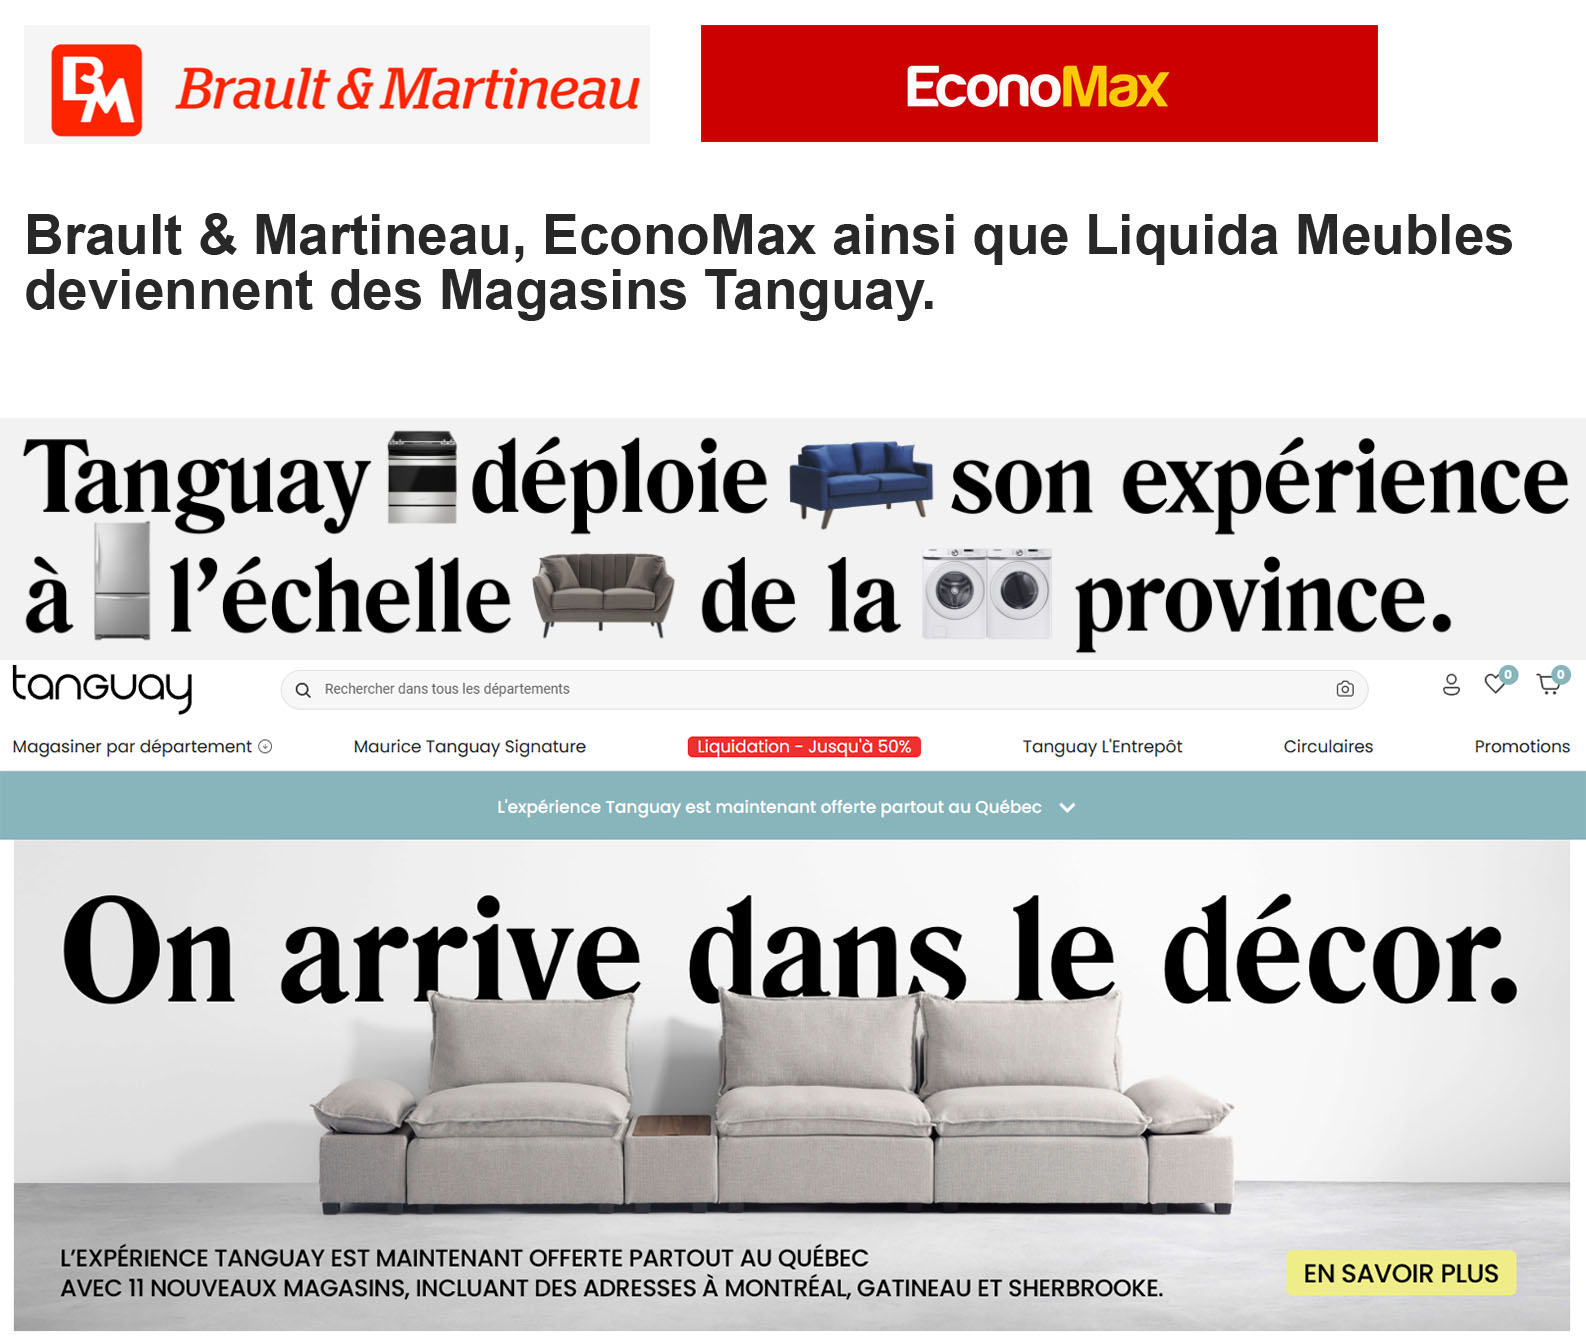 Brault & Martineau, EconoMax ainsi que Liquida Meubles deviennent des Magasins Tanguay.